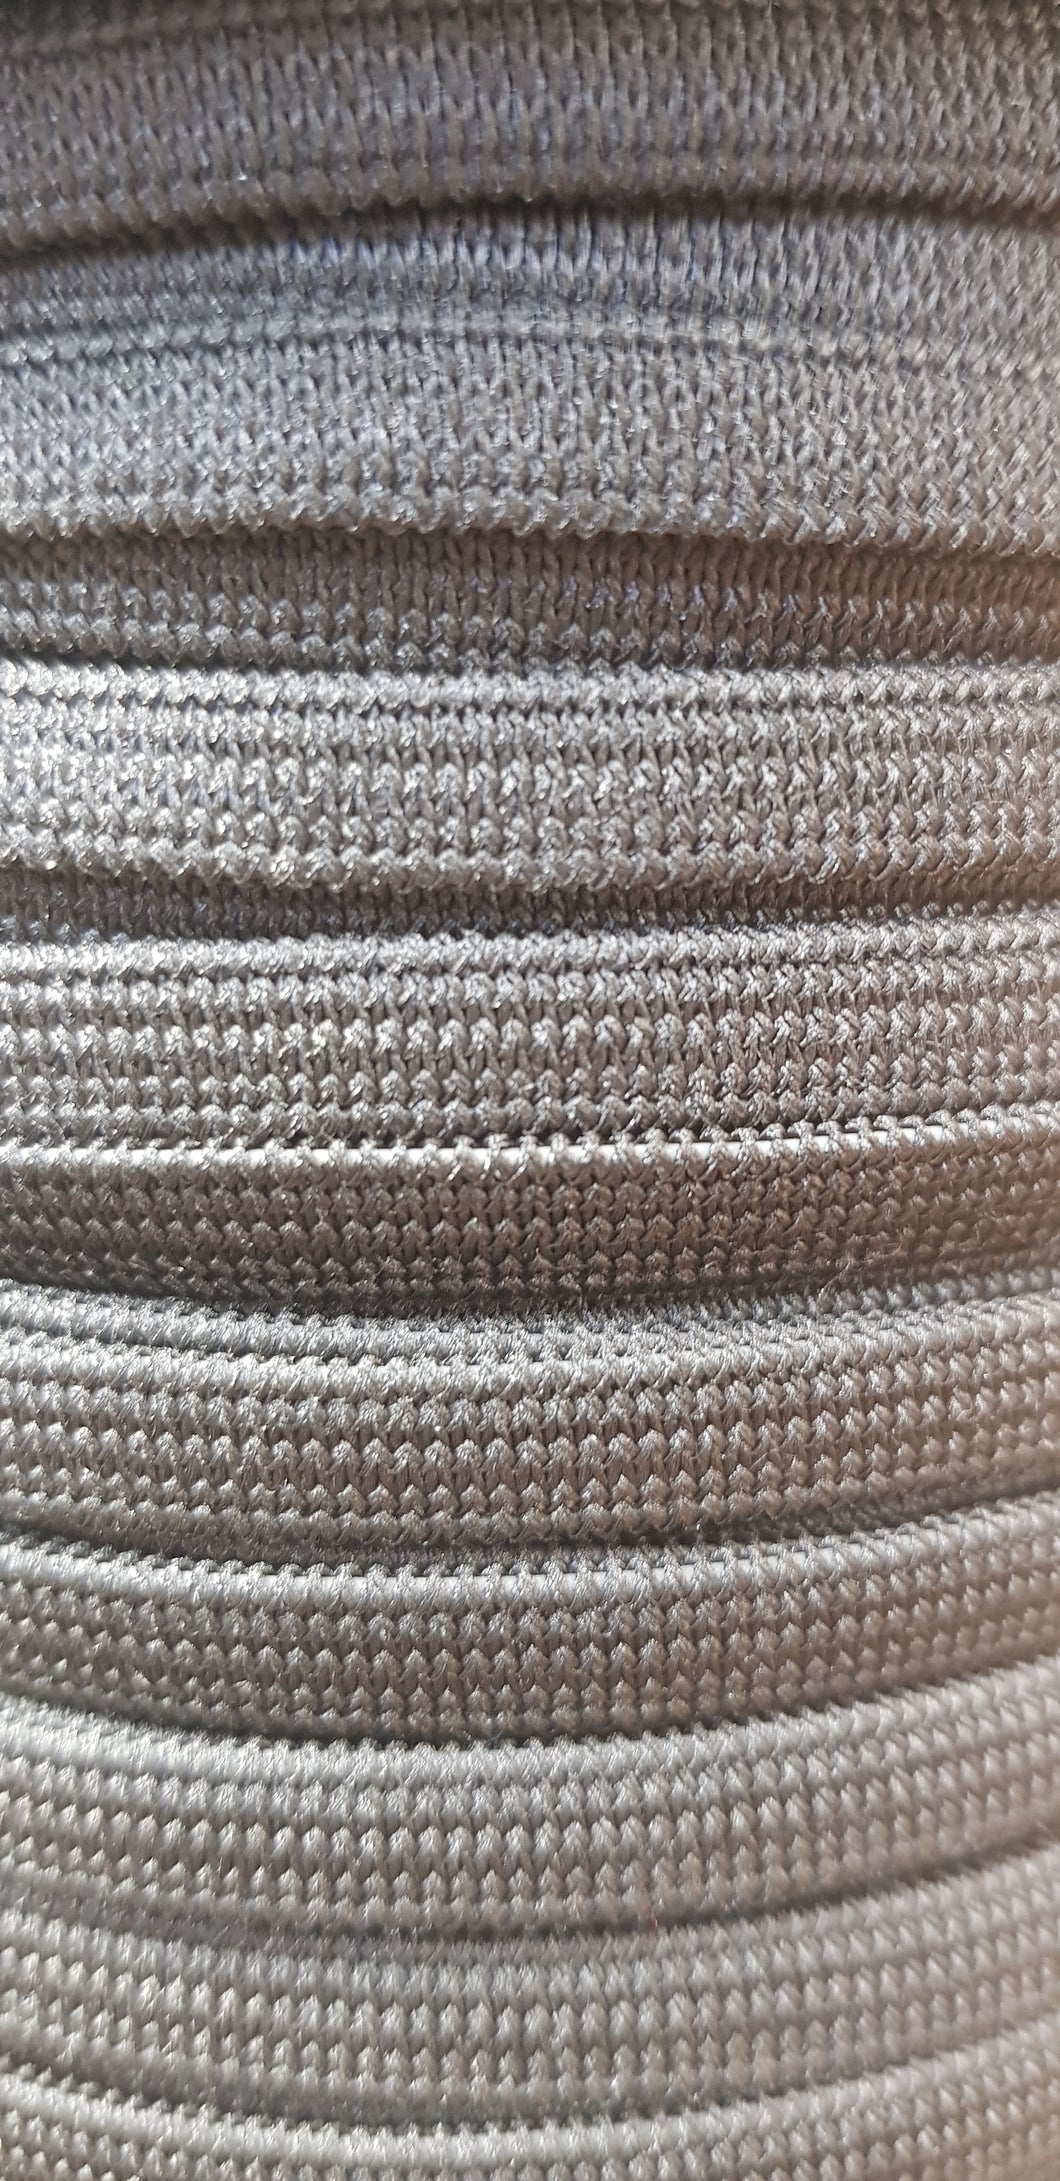 8mm White Elastic Knitted/Weaved 1m